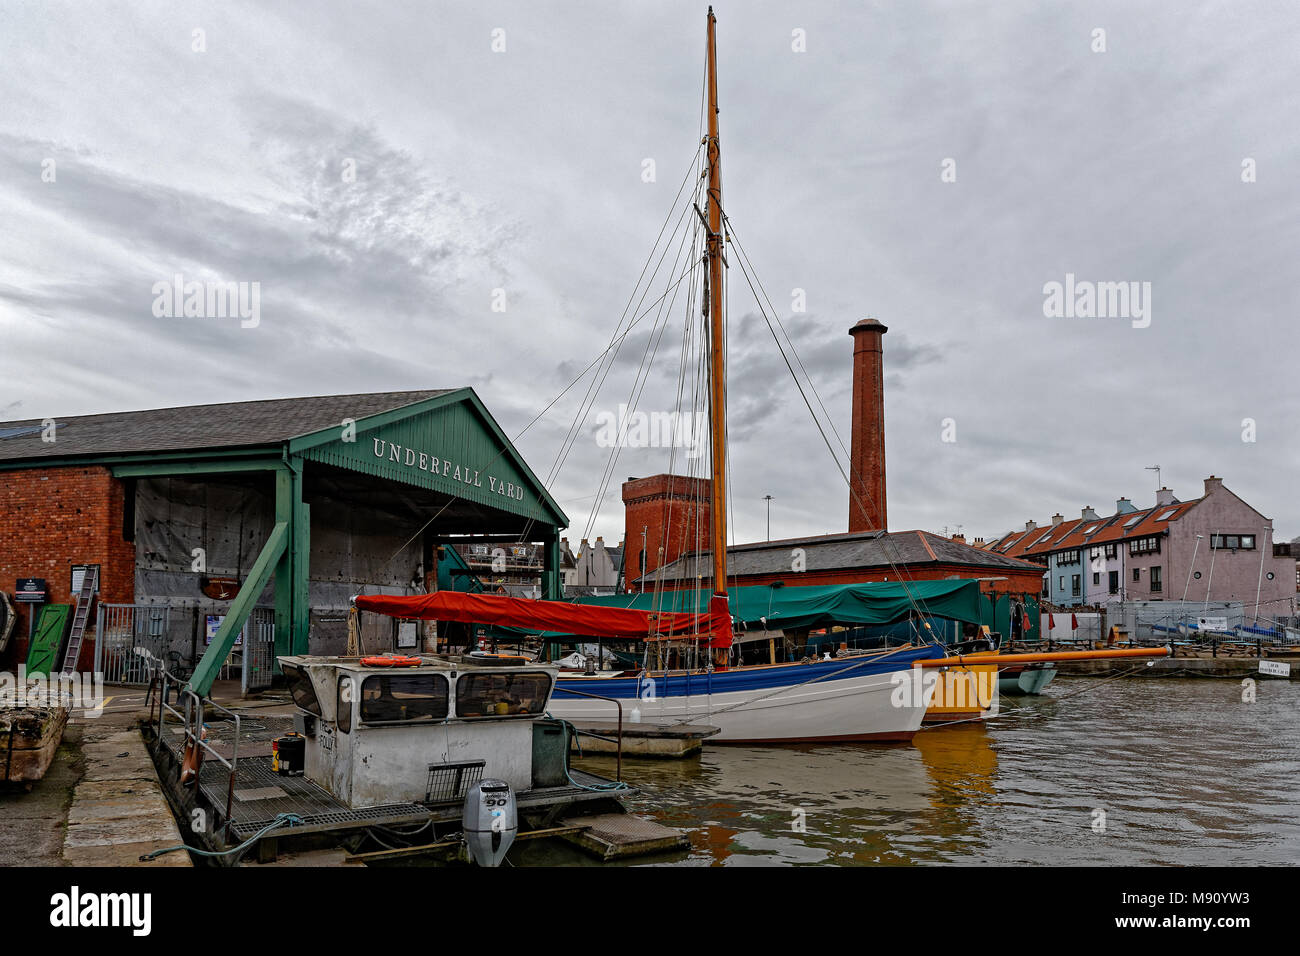 Underfall Yard su Bristol's Floating Harbour Foto Stock